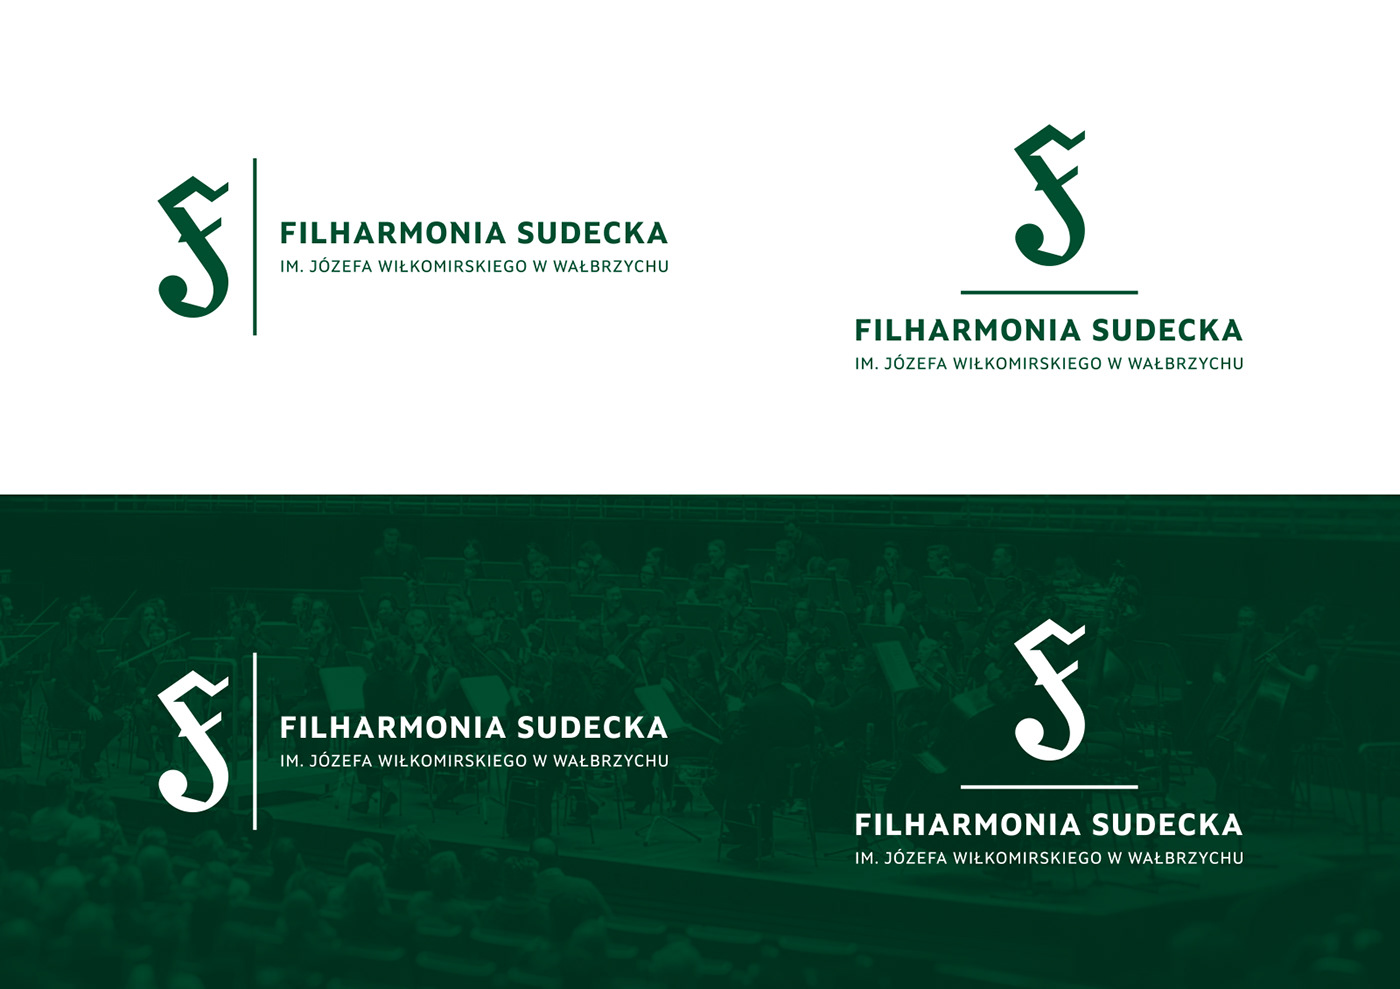 filharmonia identity identyfikacja wizualna instrument logo Logo Design monogram orchestra philharmonic symbol